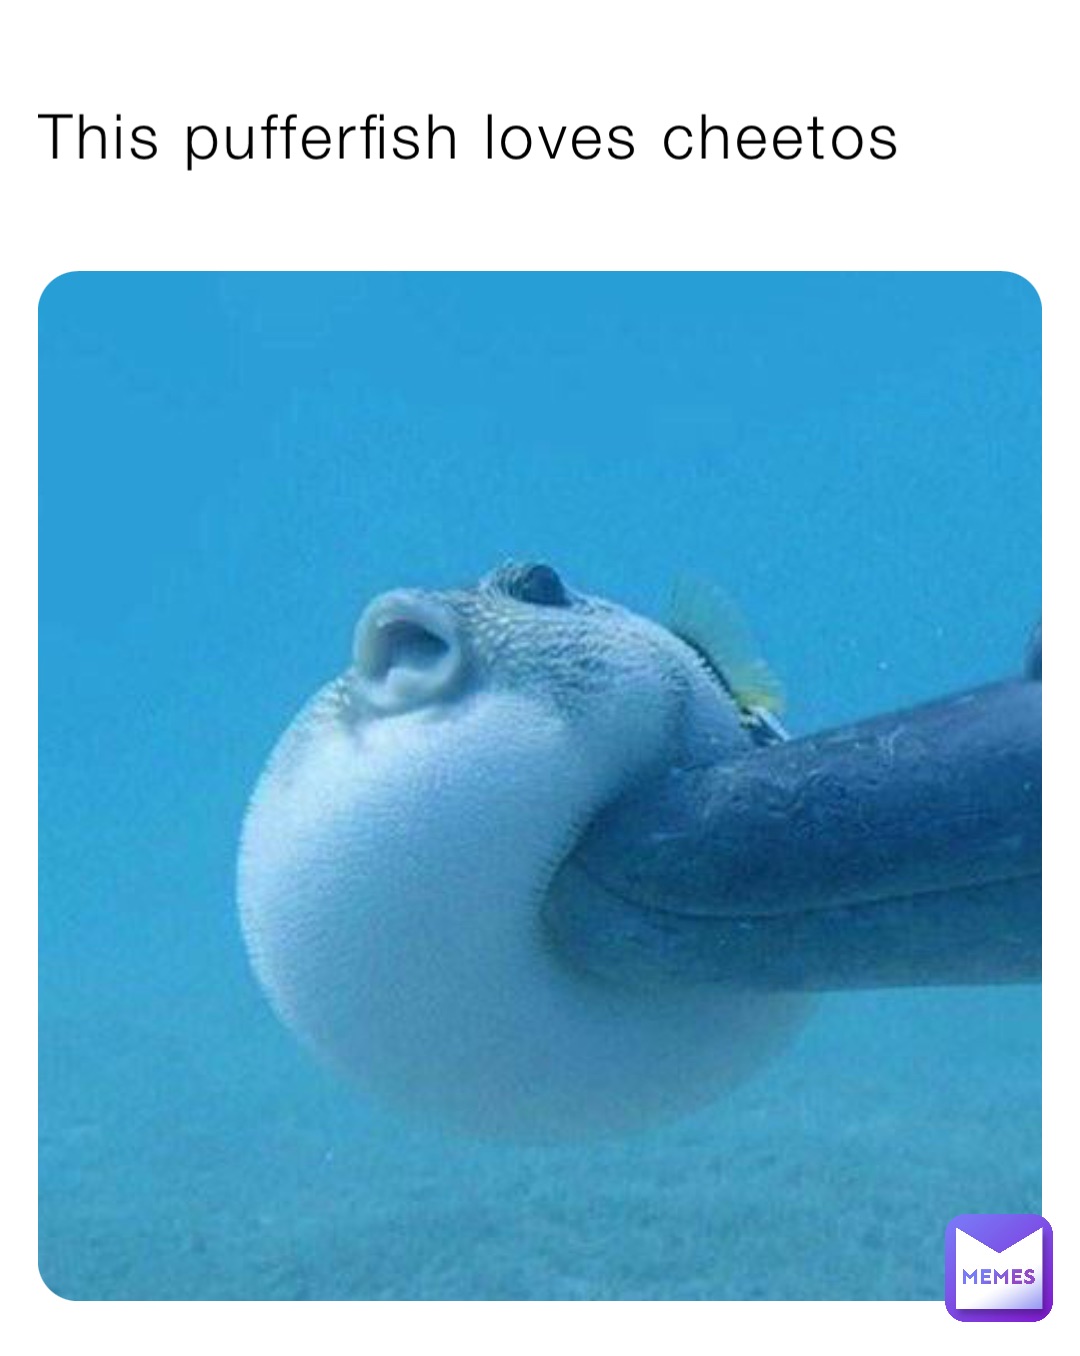 This pufferfish loves cheetos